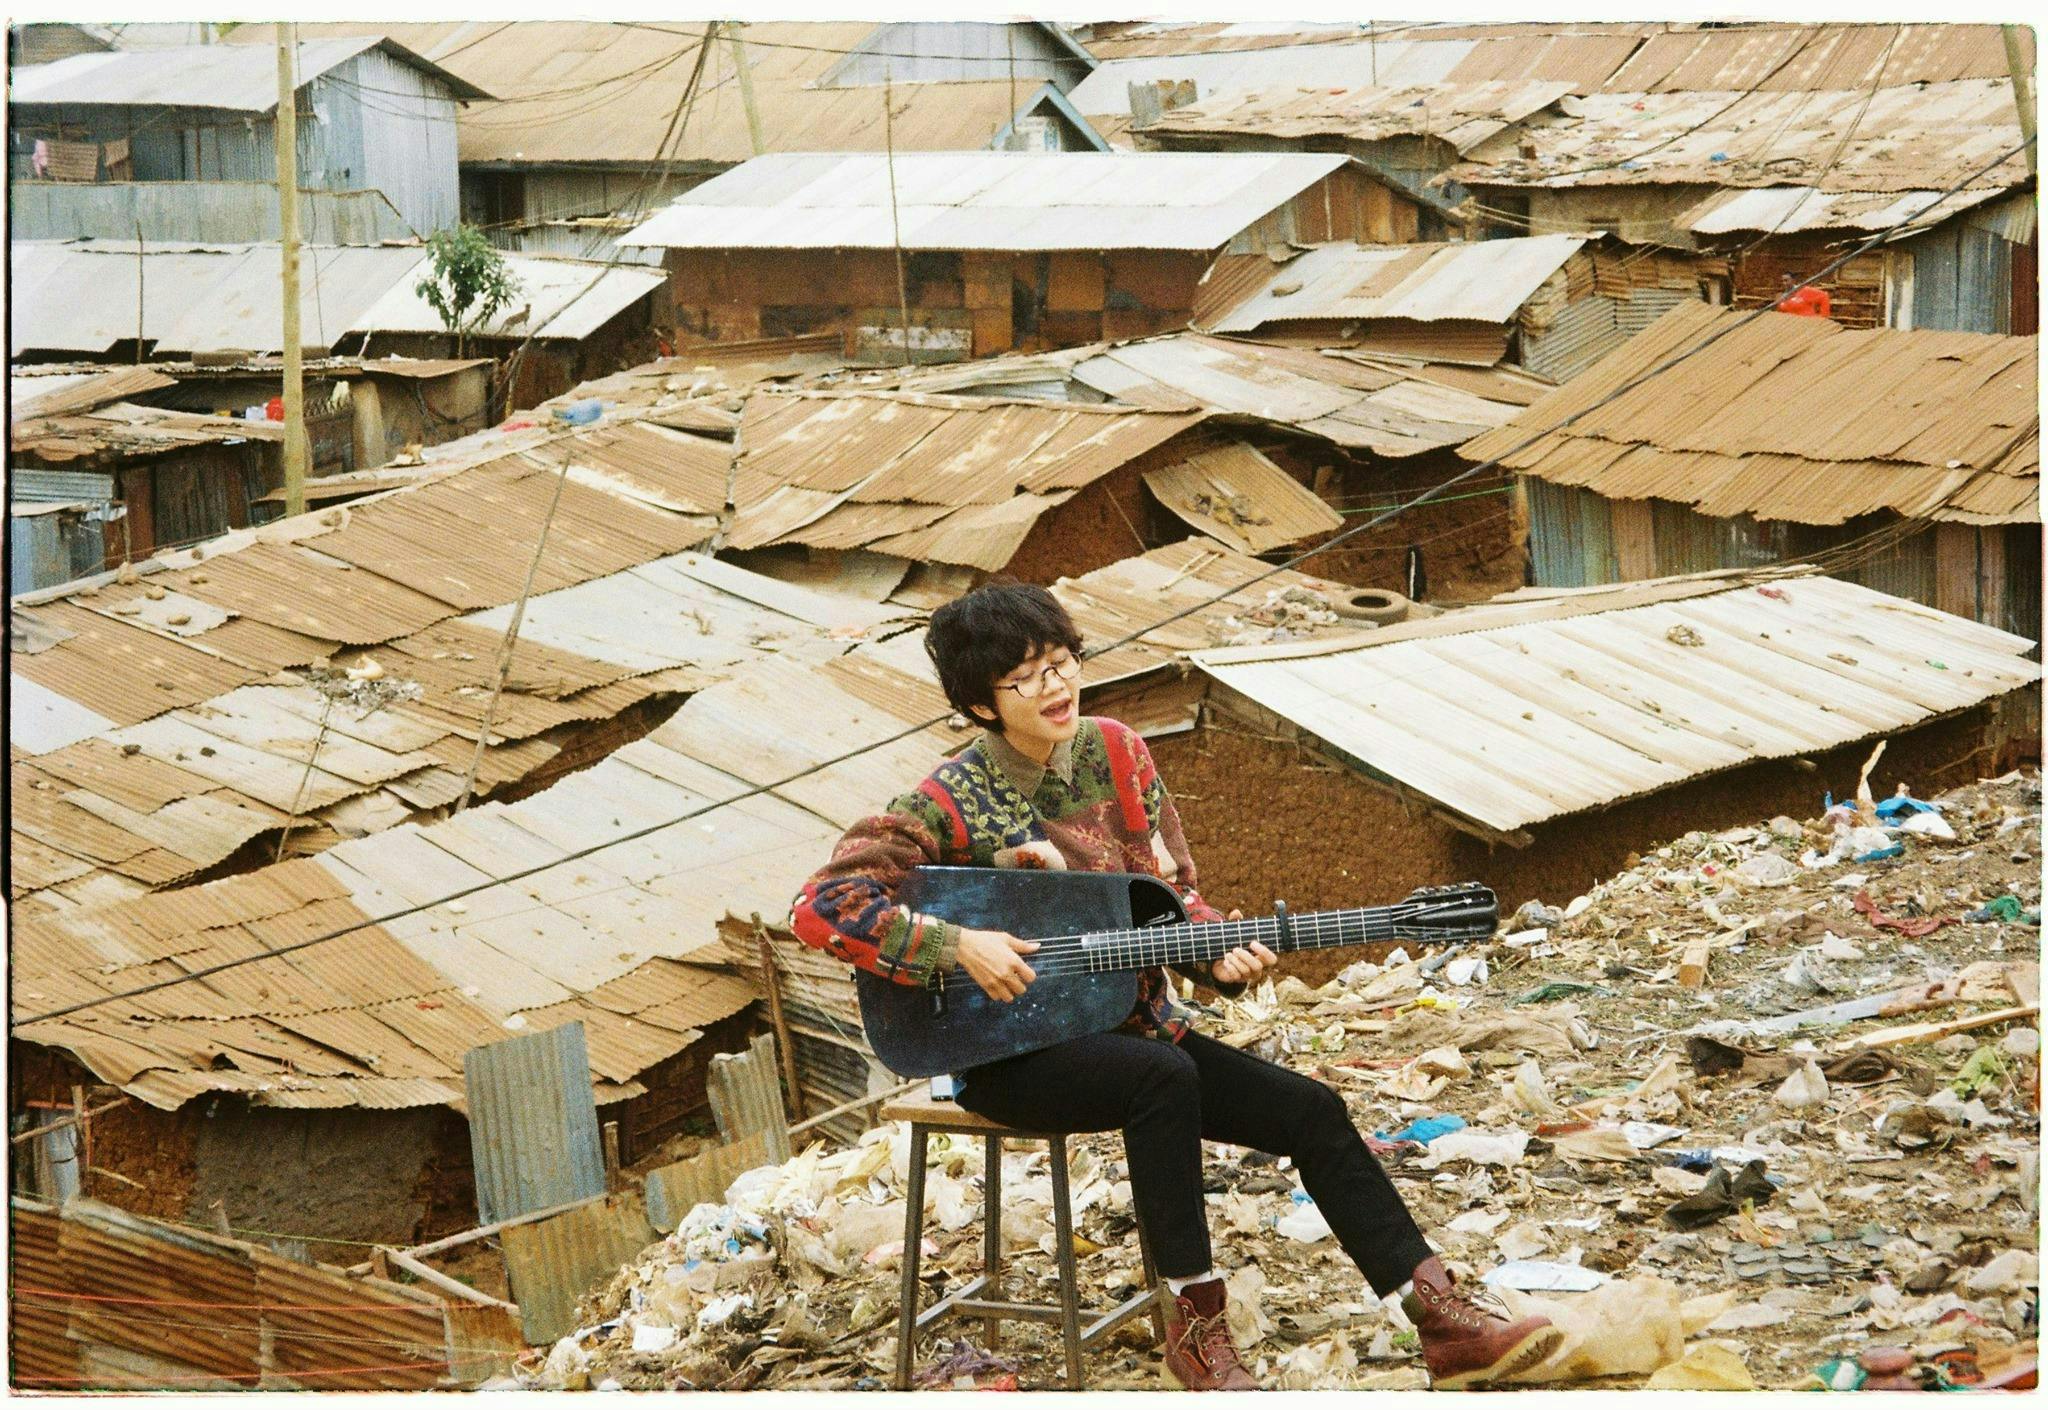 slum urban building person guitar musical instrument leisure activities shoe clothing footwear